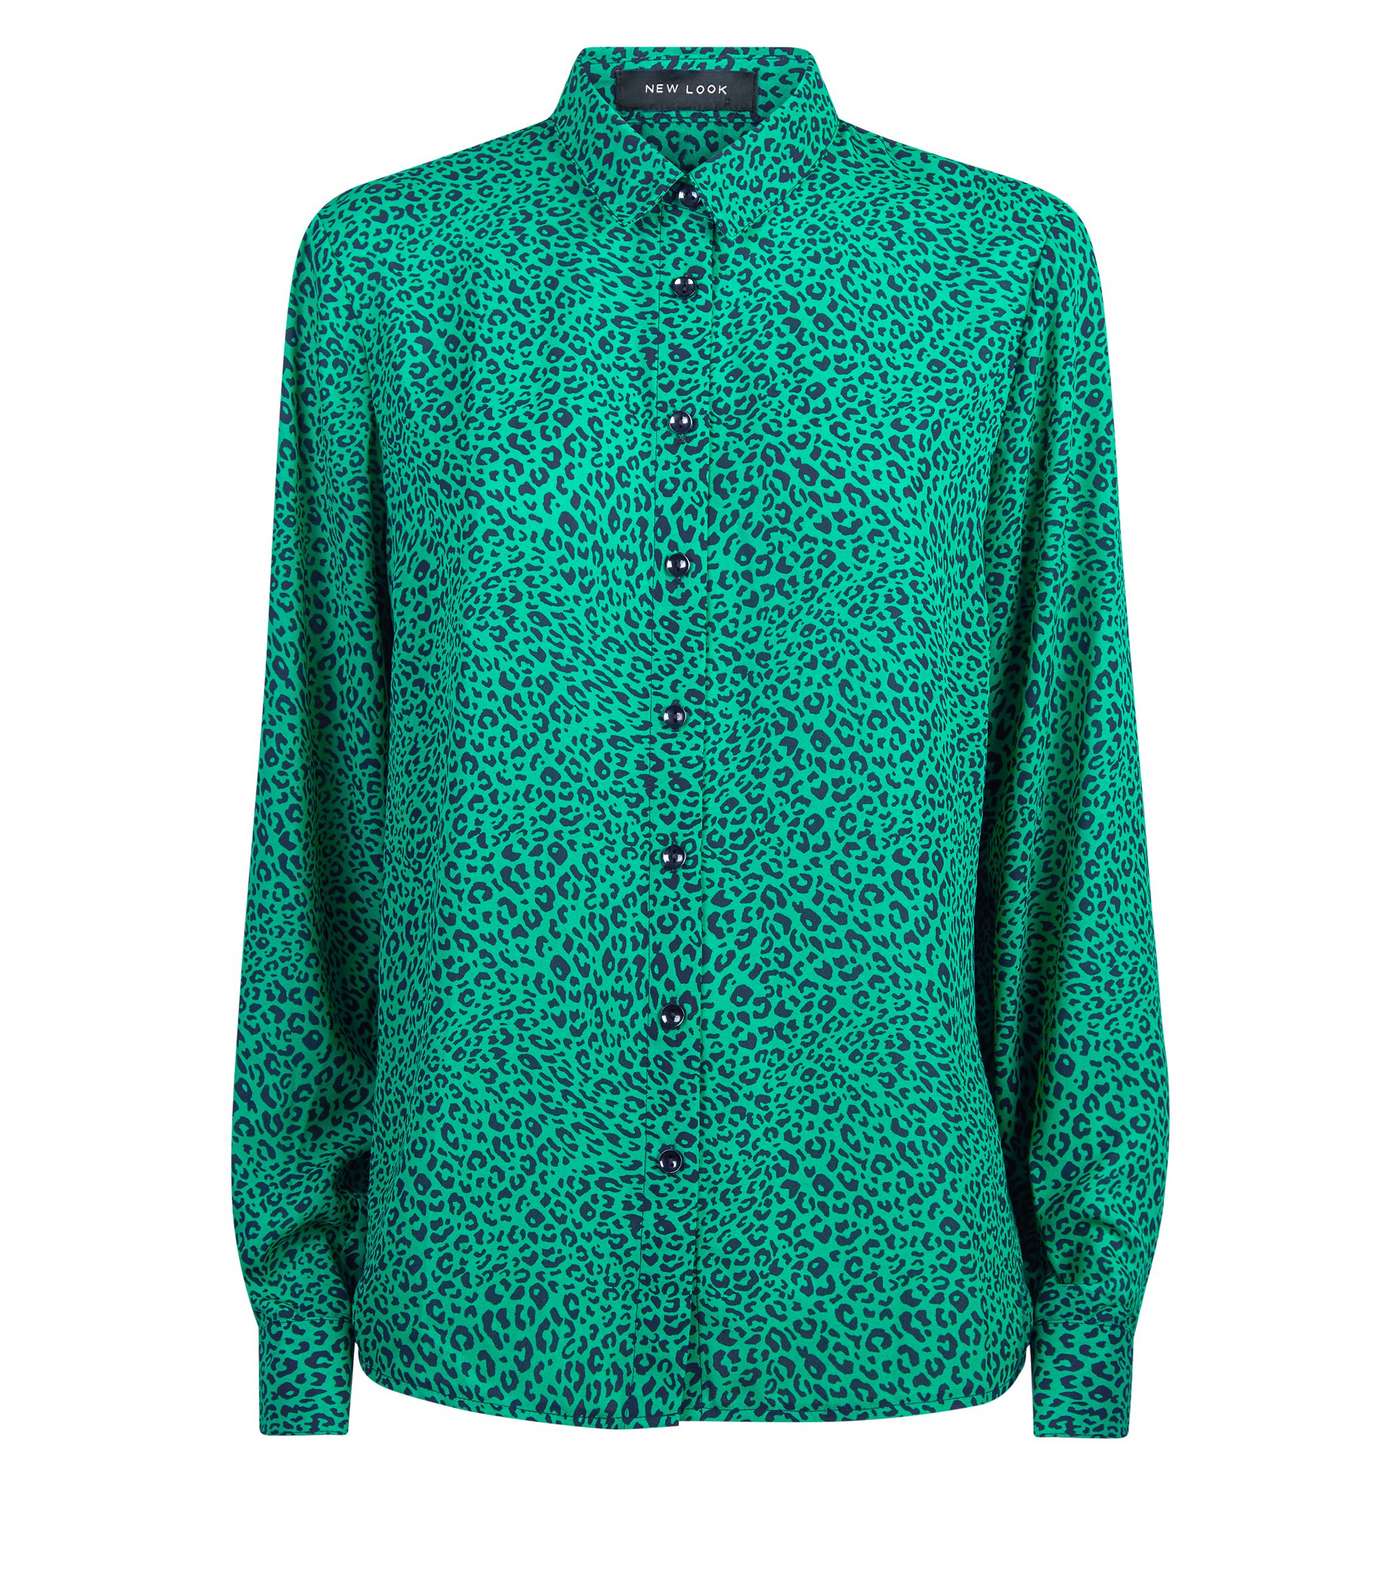 Green Leopard Print Long Sleeve Shirt Image 4